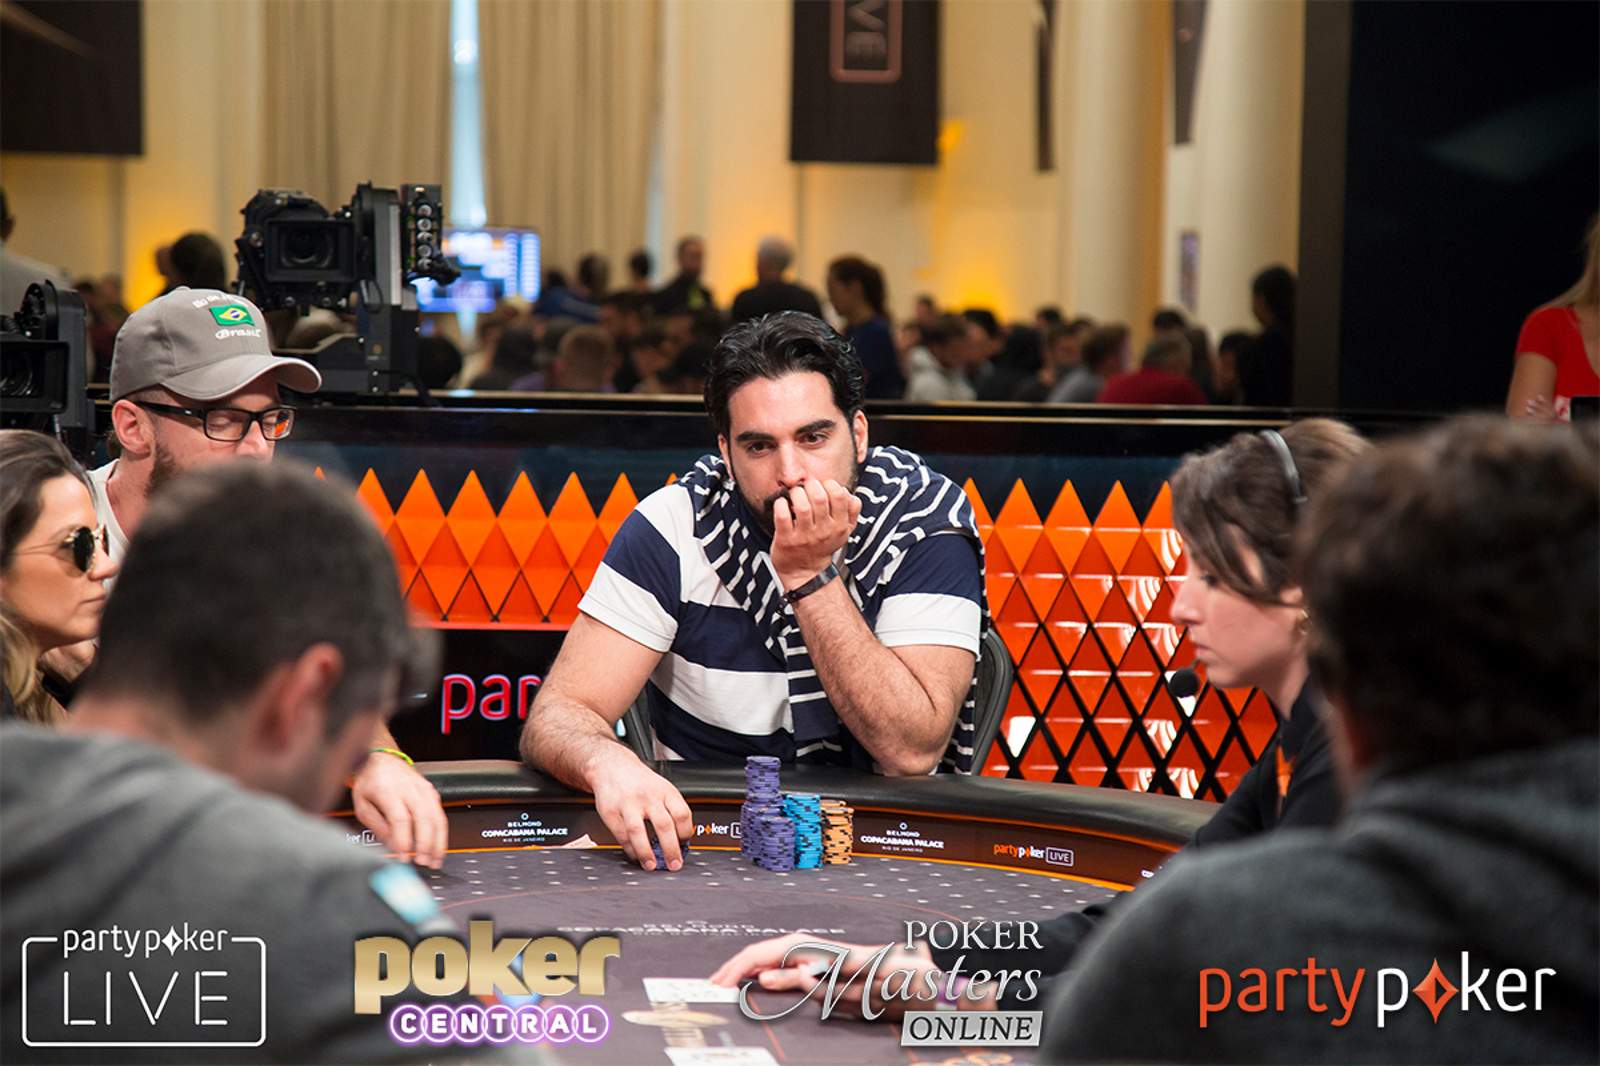 Alexandros Kolonias Wins the 2020 Poker Masters Online Championship on partypoker